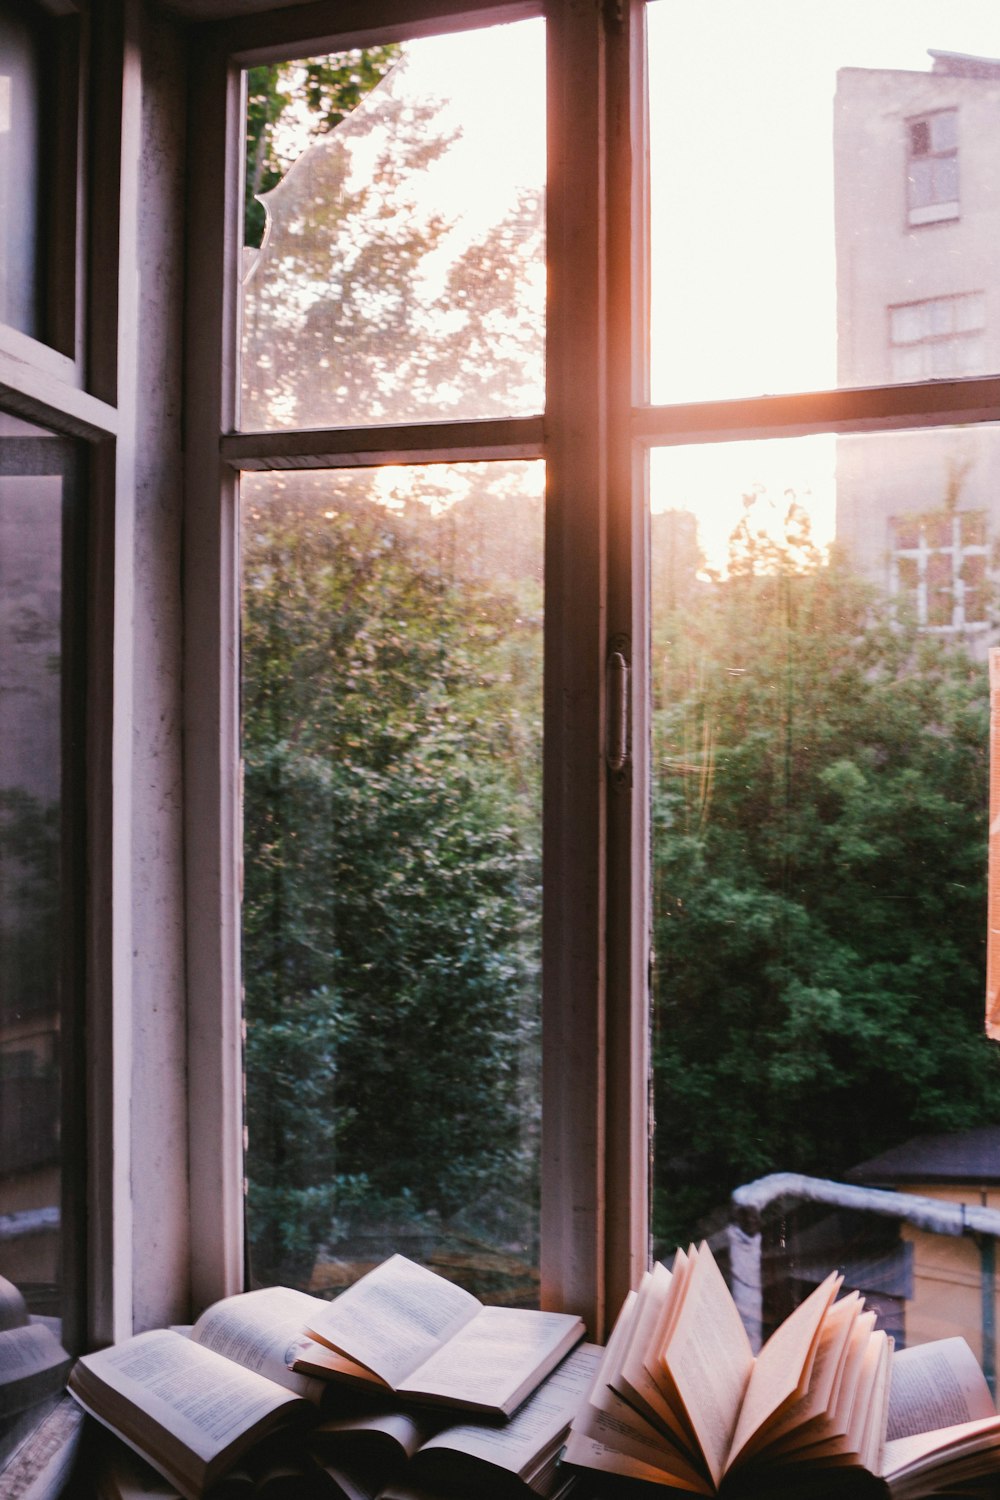 books beside window during sunset